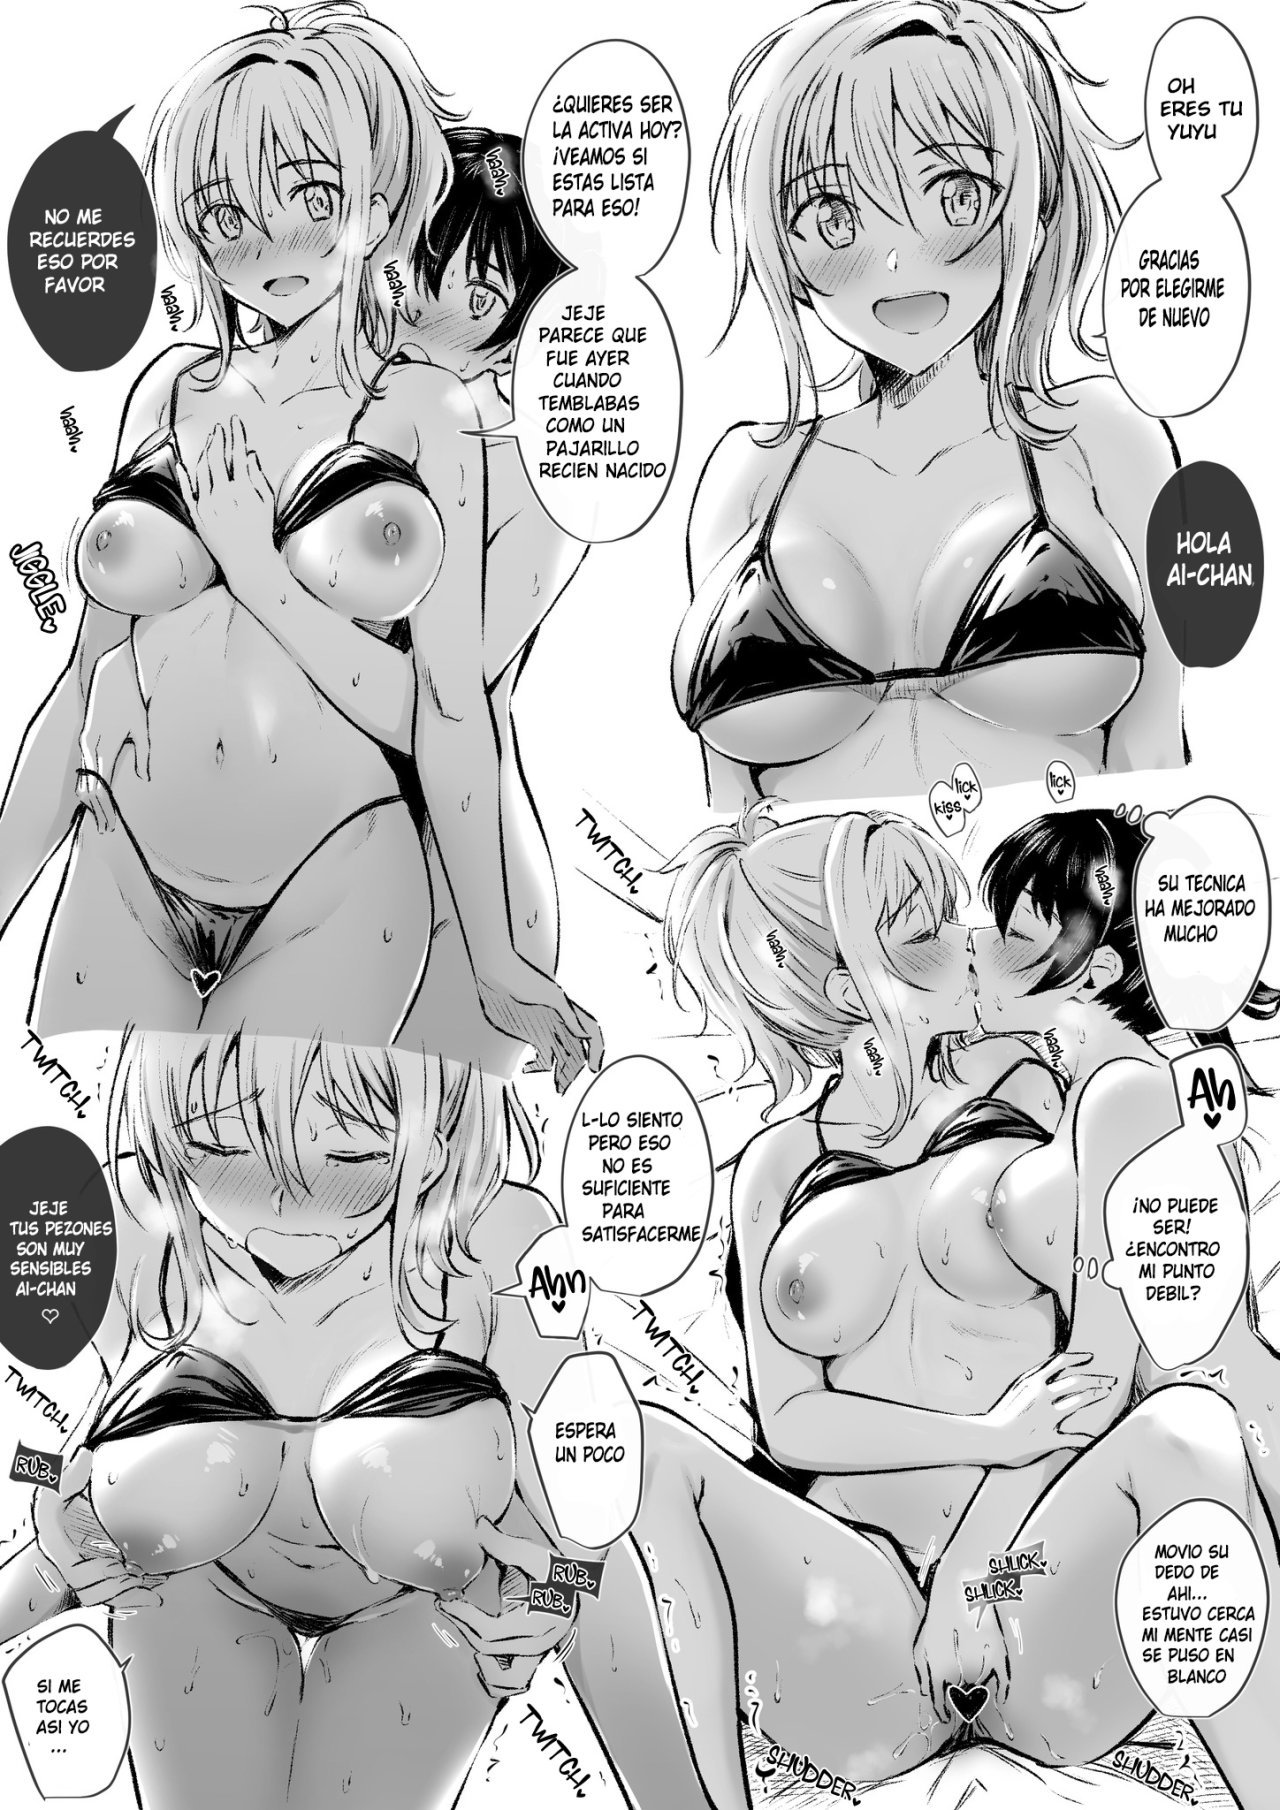 Takasaki Yu Is Interested In Lesbian Brothels 02 - 0